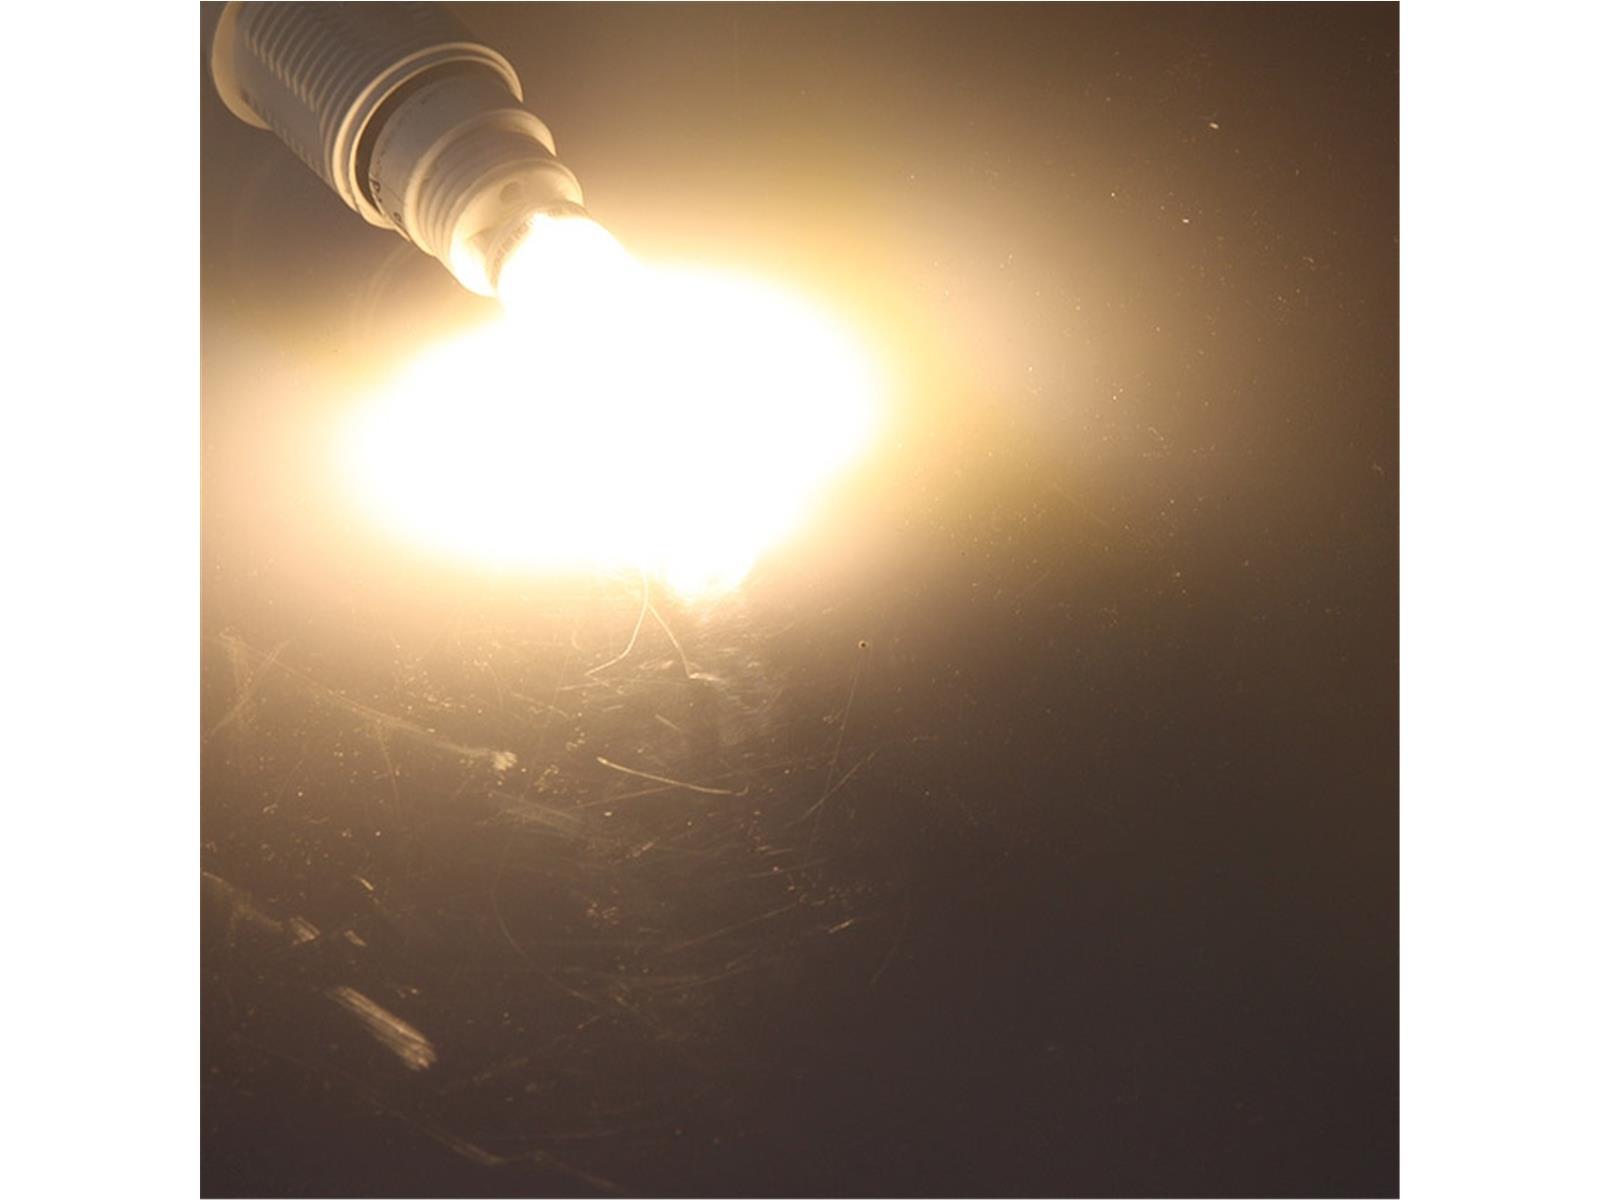 LED Stiftsockel G9, 4W, 330lm3000k, 240°, 230V, warmweiß